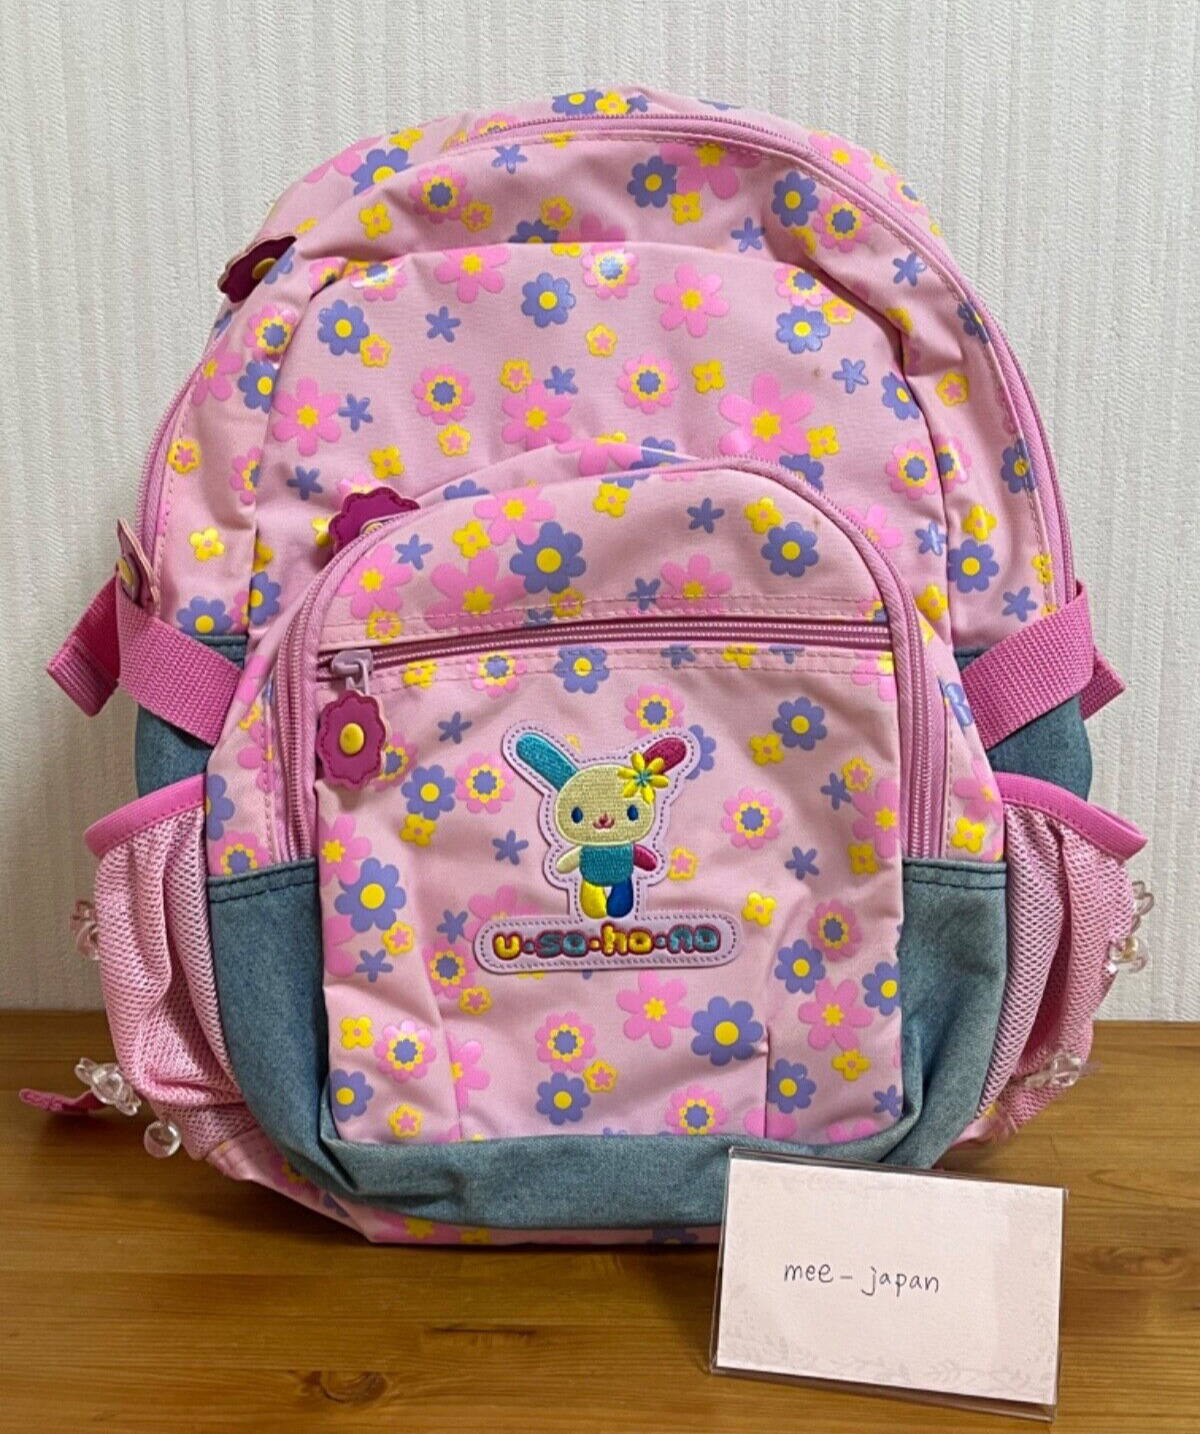 Sanrio Usahana Backpack School Bag 2004 Pink Flower Kids kawaii Japan